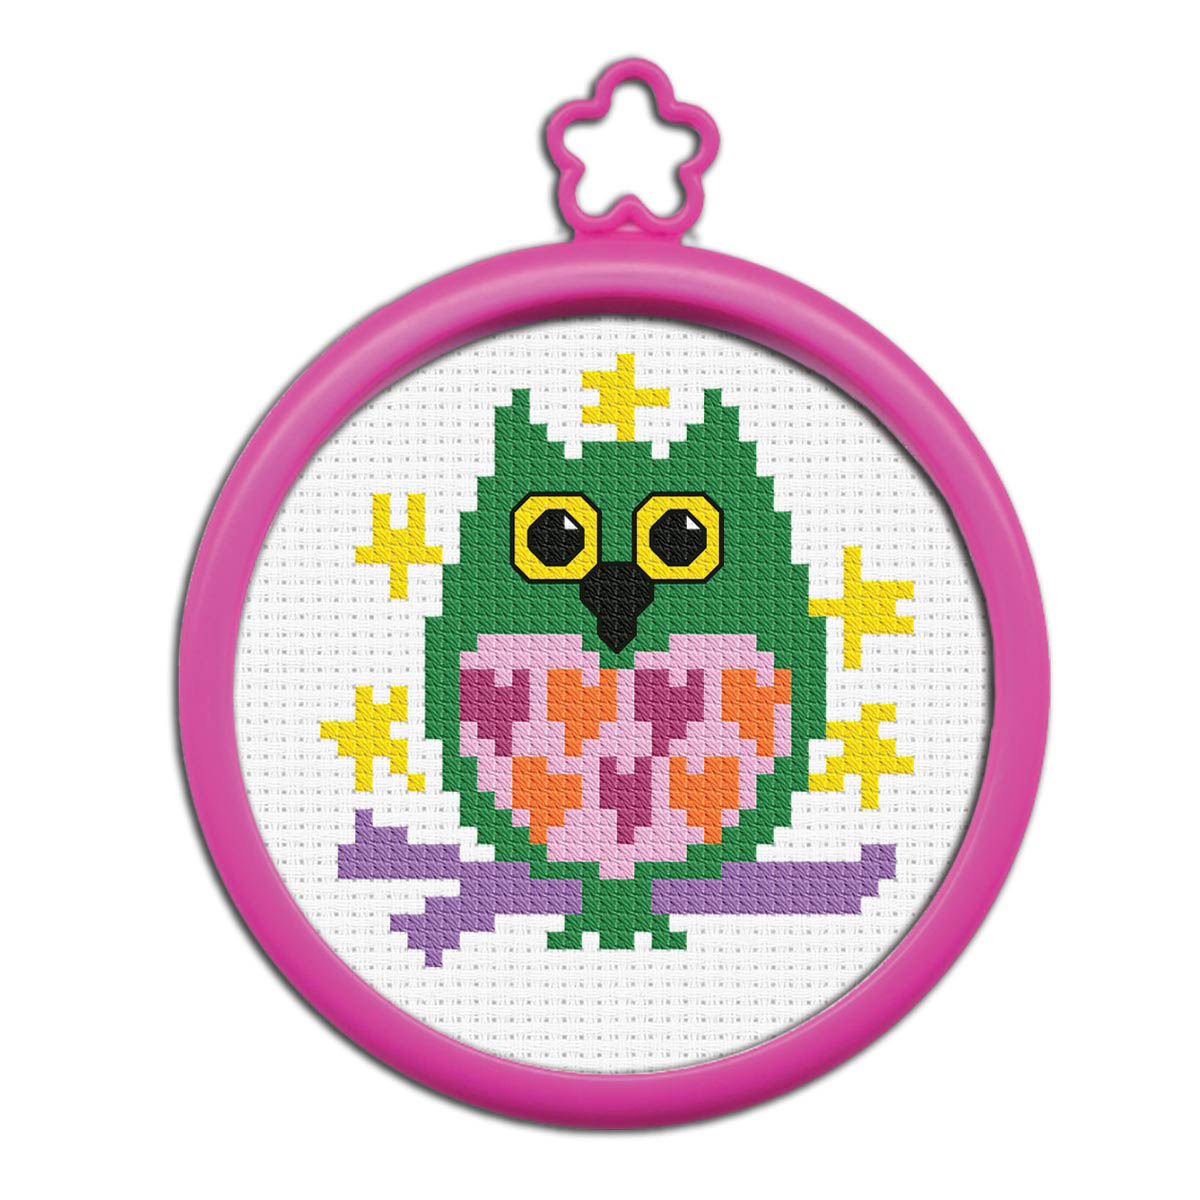 Bucilla ® My 1st Stitch™ - Counted Cross Stitch Kits - Mini - Owl - 45641